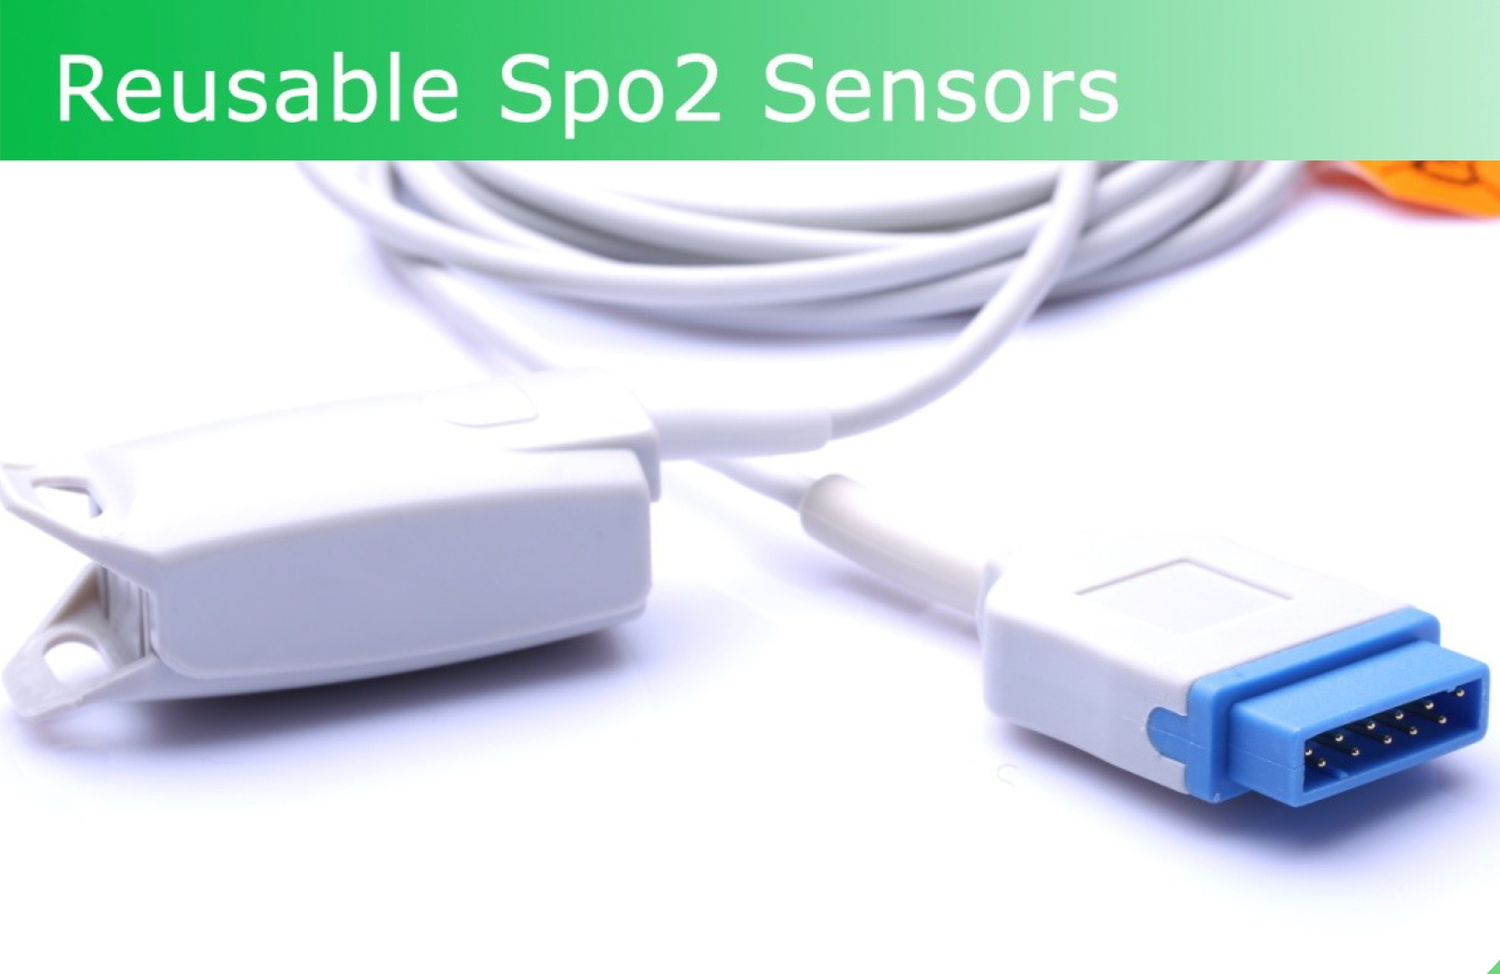 <p><span style="font-weight: bold;">Reusable Spo2 Sensors</span><br></p>